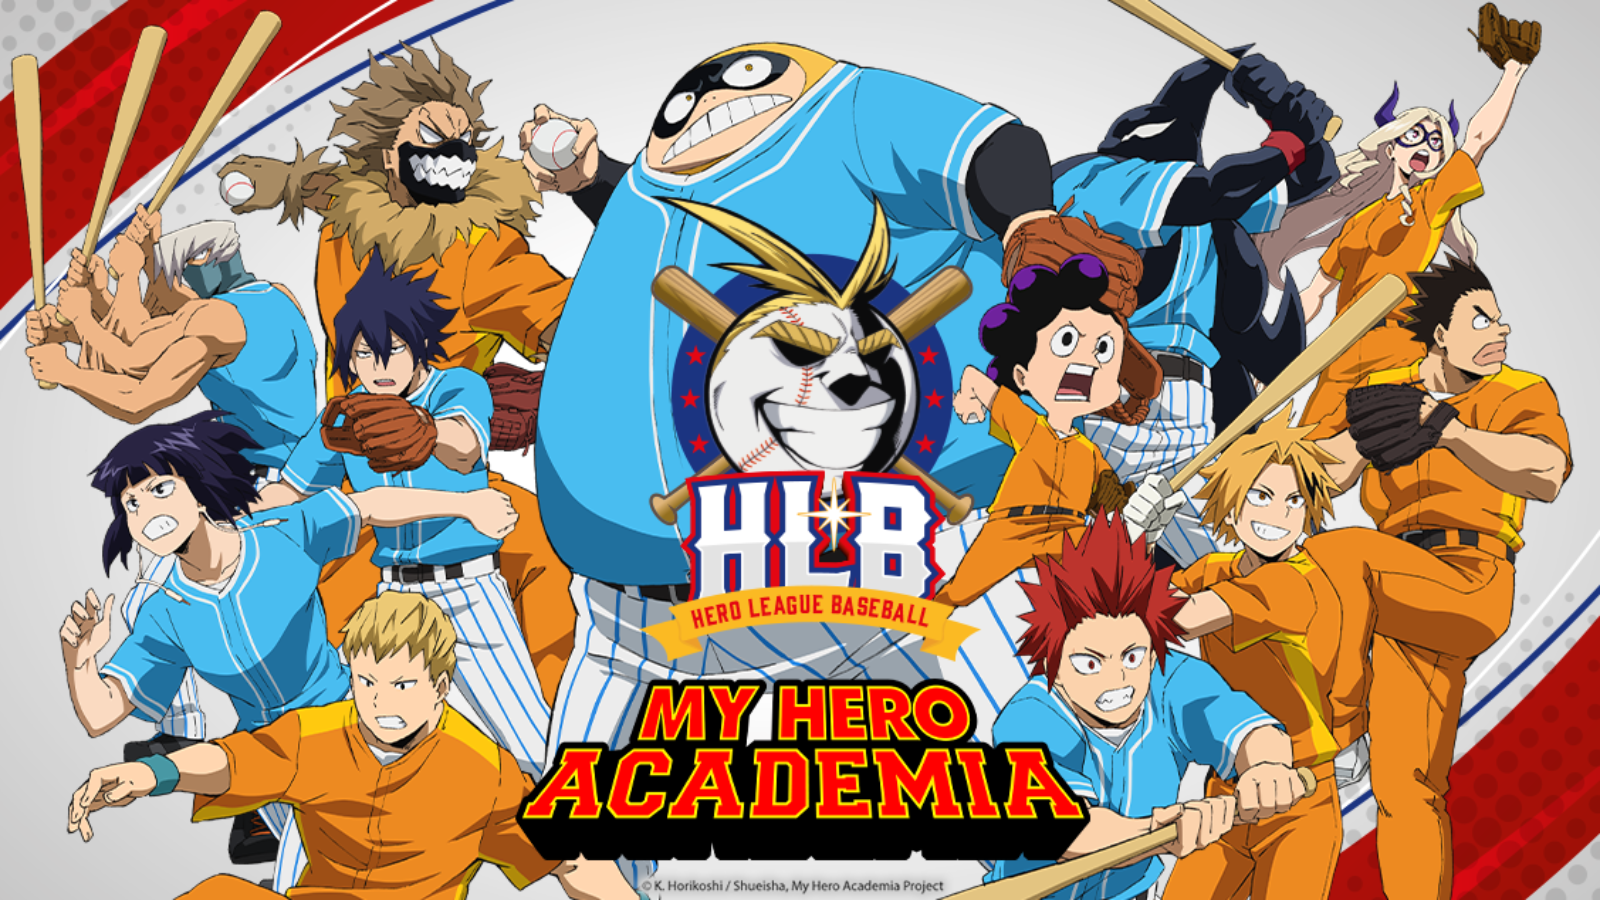 My Hero Academia Anime Expo Hero League of Baseball